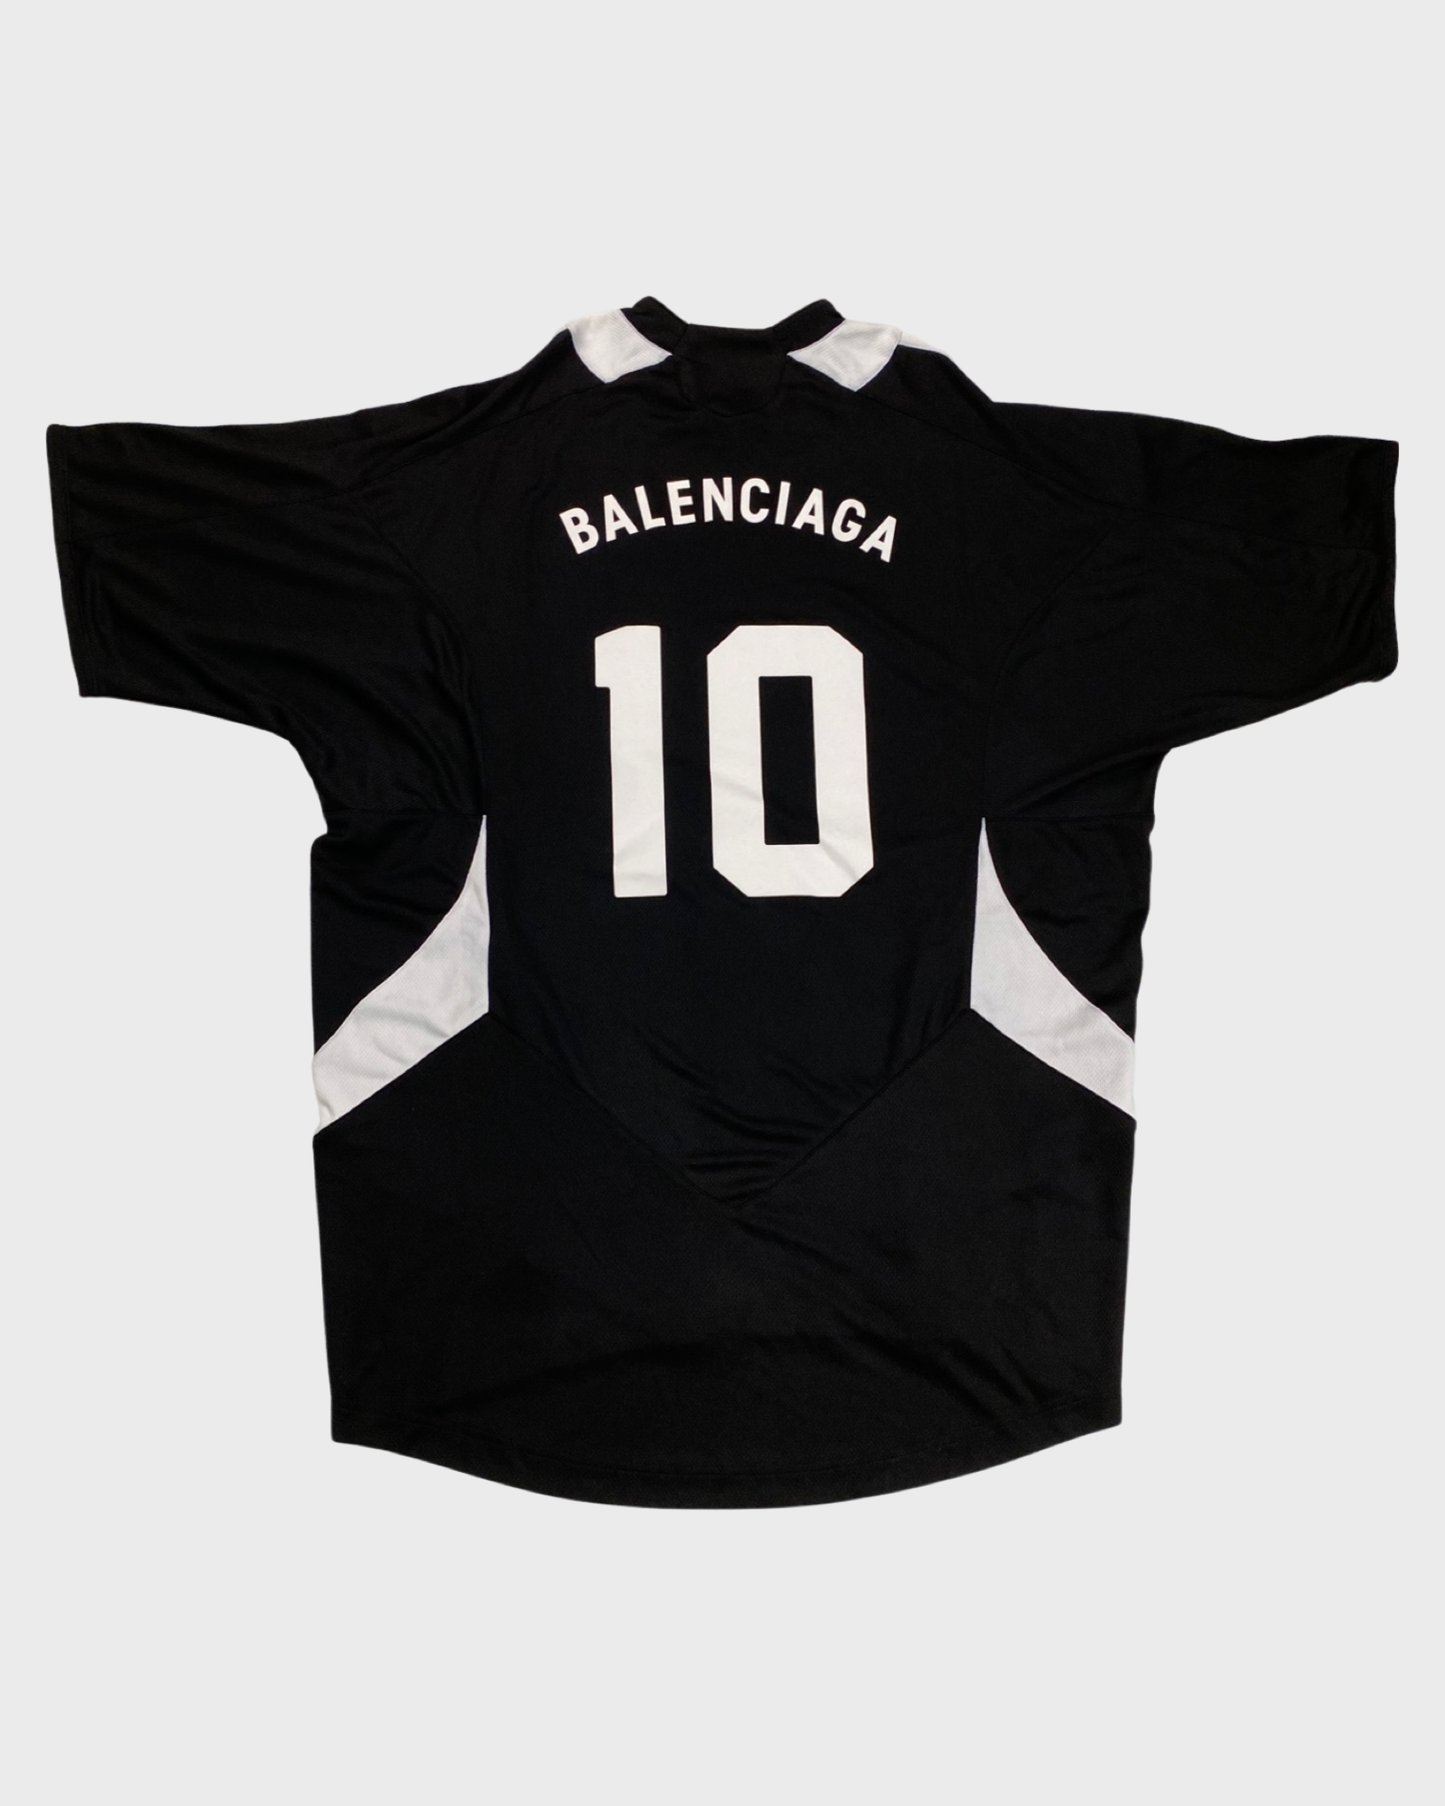 Balenciaga AW20 runway Football soccer jersey kit in black SZ:XS|L|XL